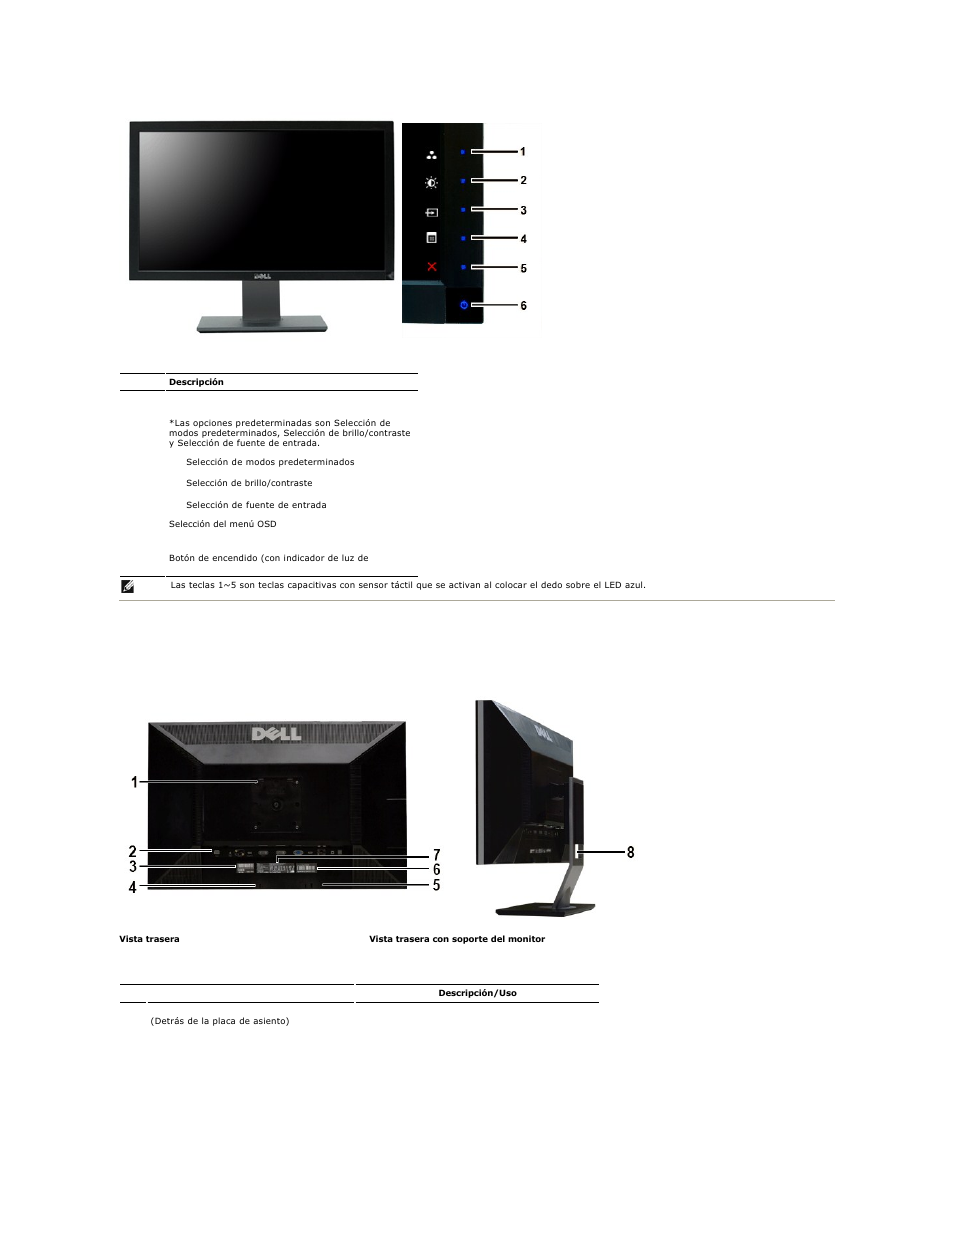 Vista trasera | Dell U2711 Monitor Manual del usuario | Página 4 / 43